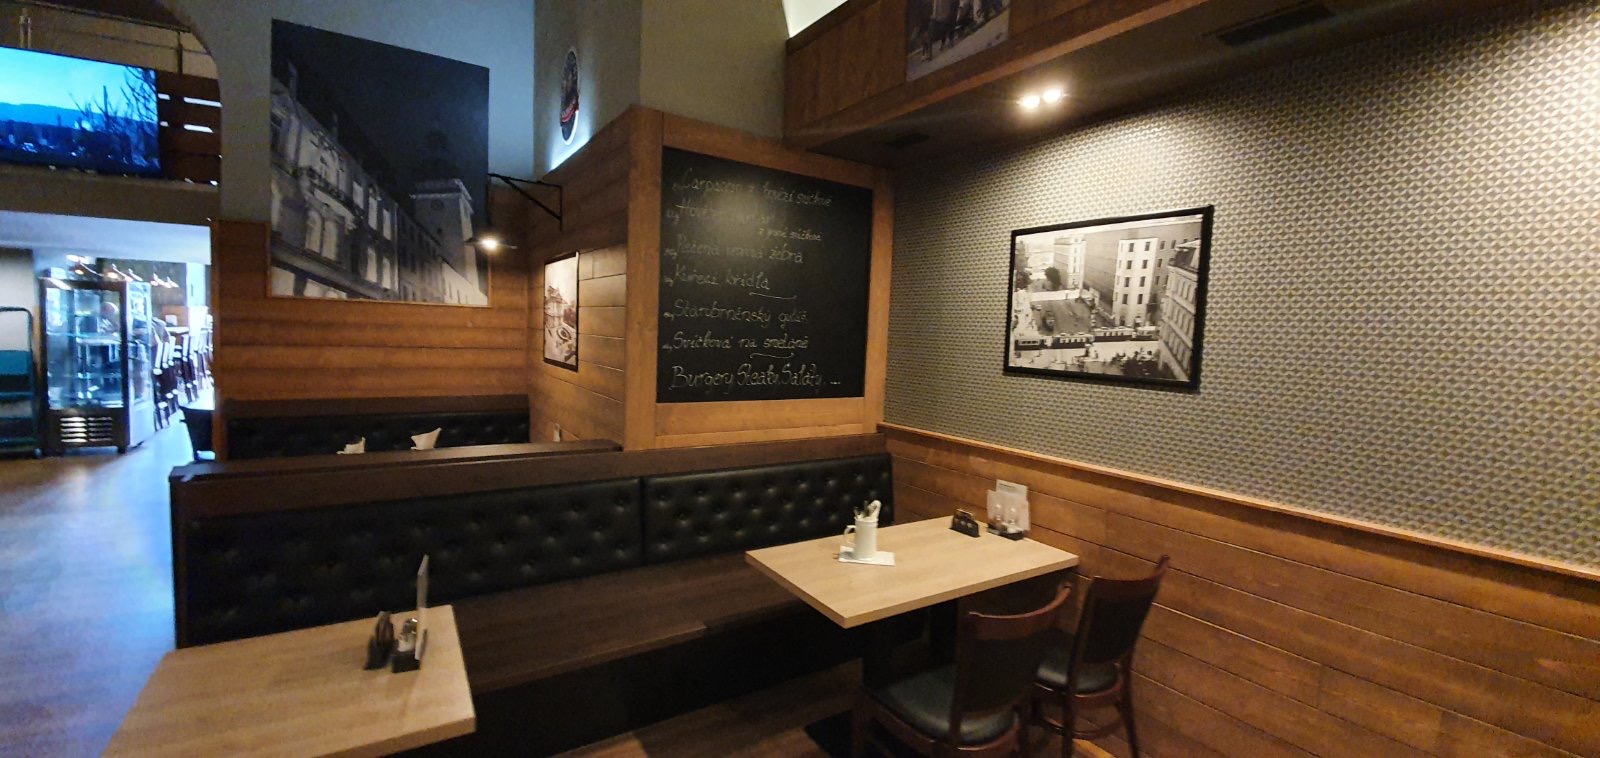 ŠTATL - restaurant, cafe, bar